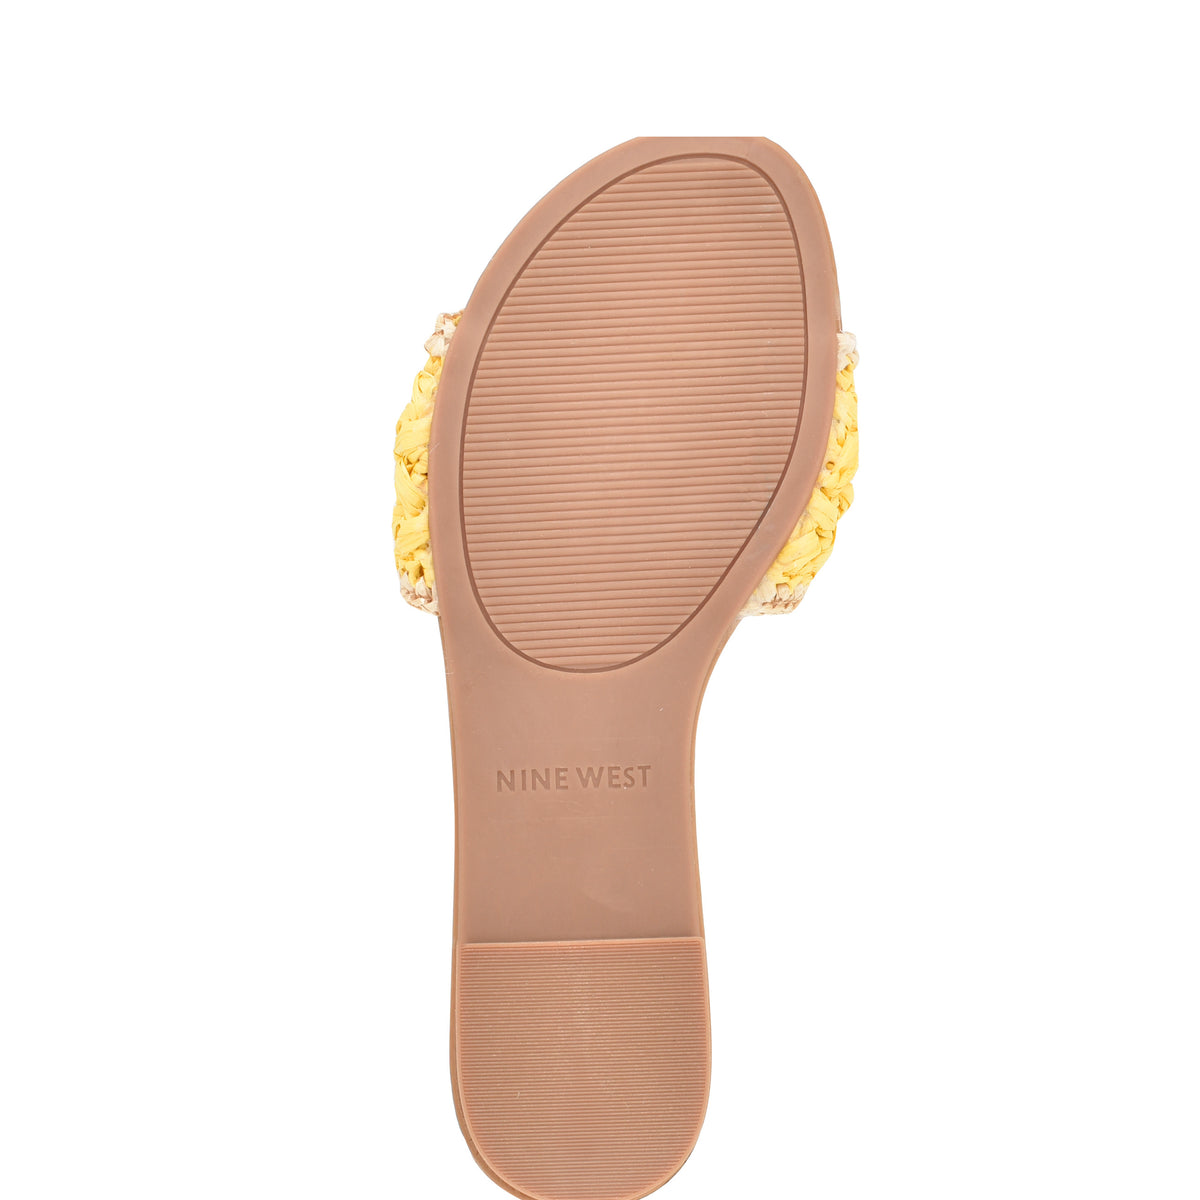 Beehiv Slide Sandals